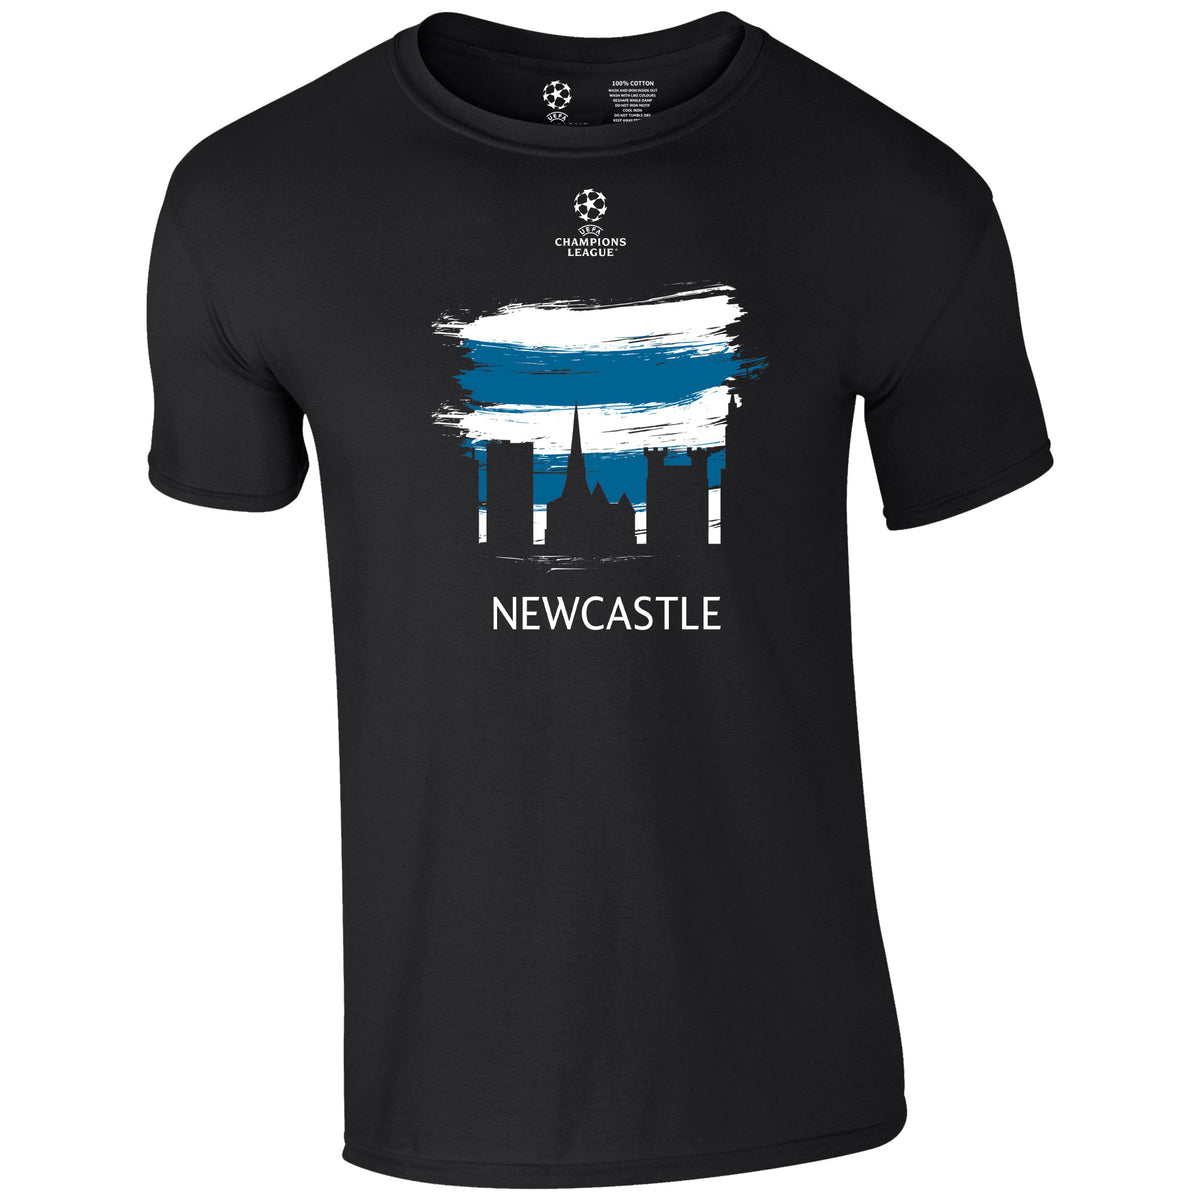 Champions League Newcastle City Painted Skyline T-Shirt Black